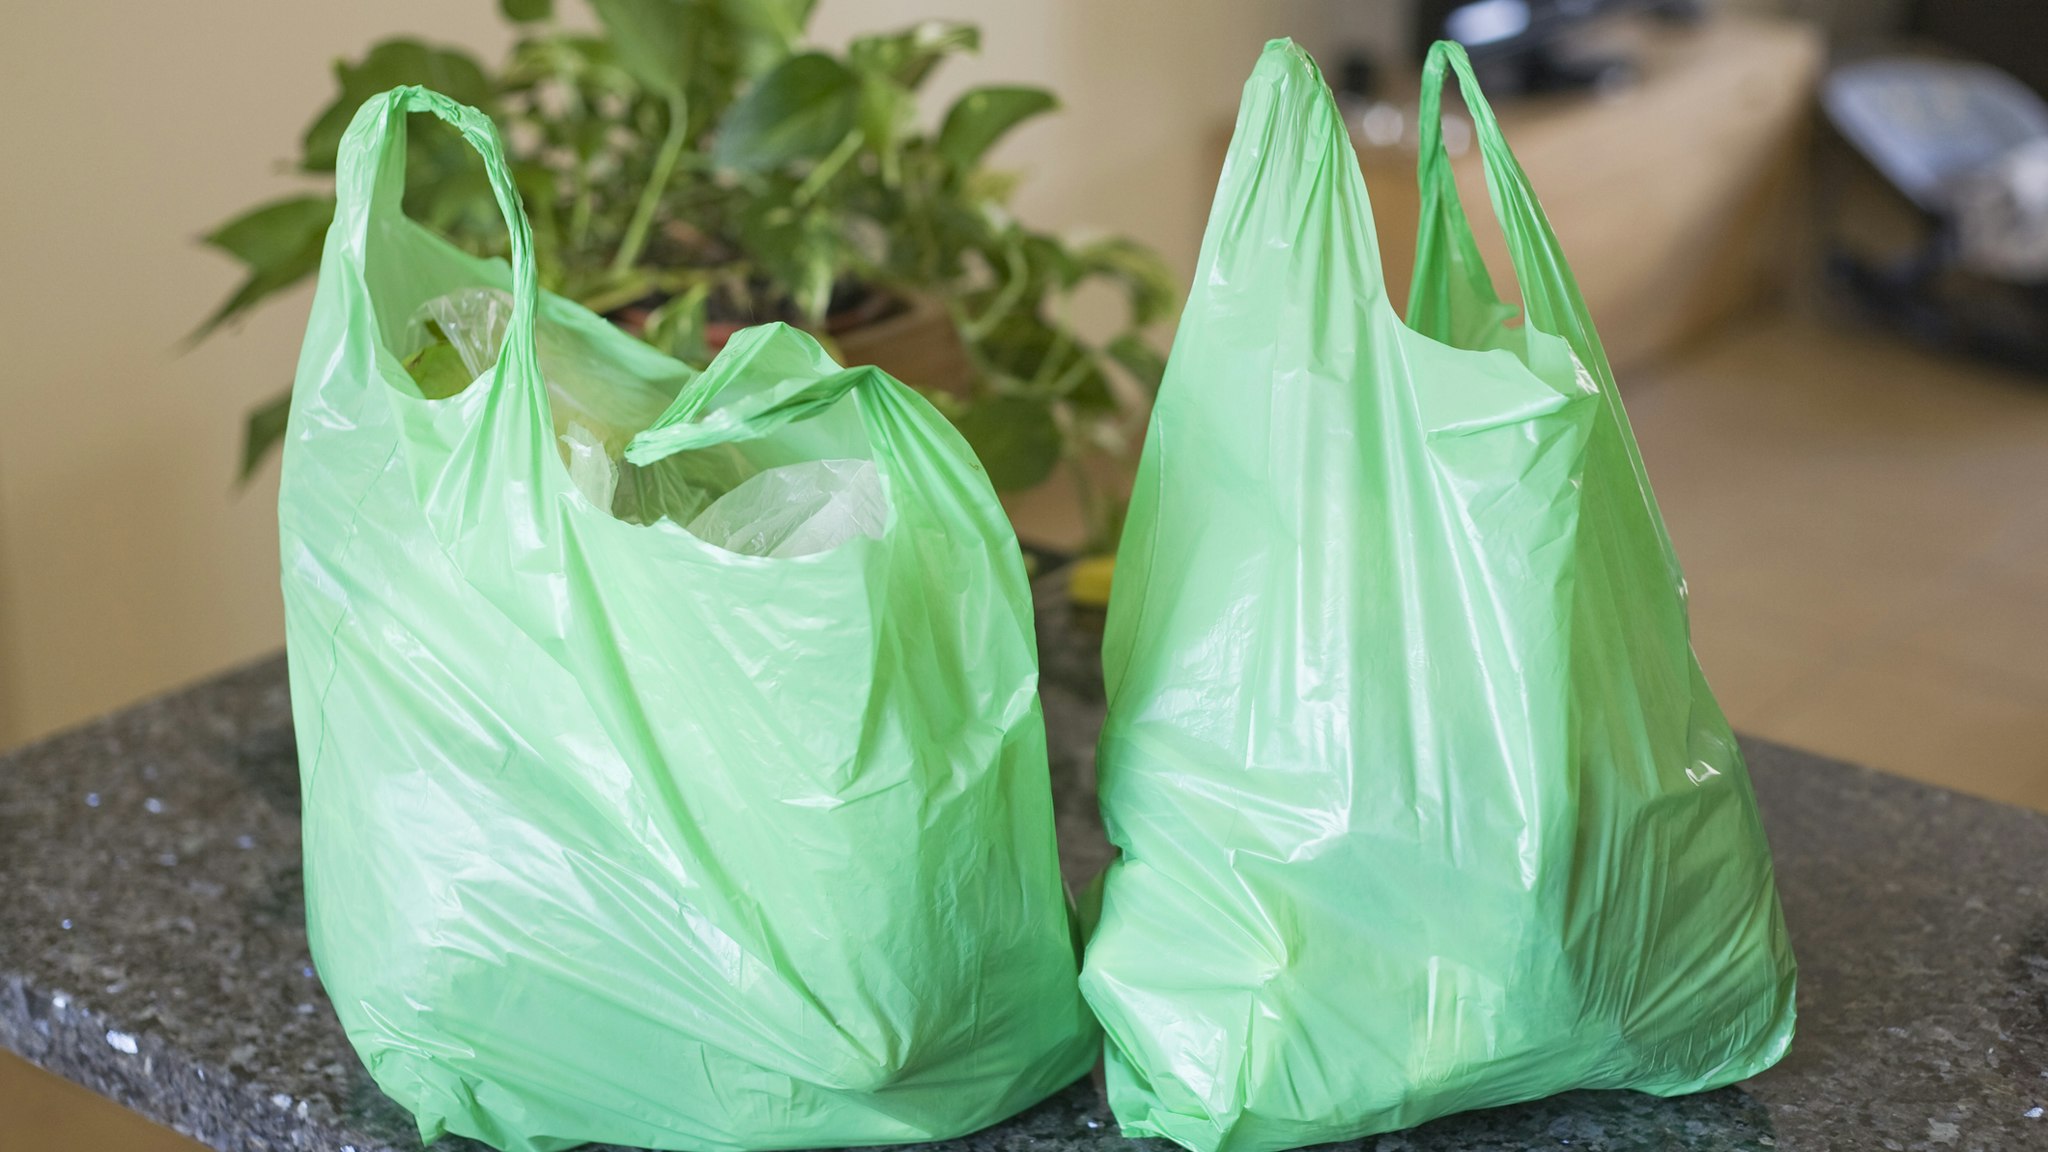 Green plastic bags on kitchen worktop.